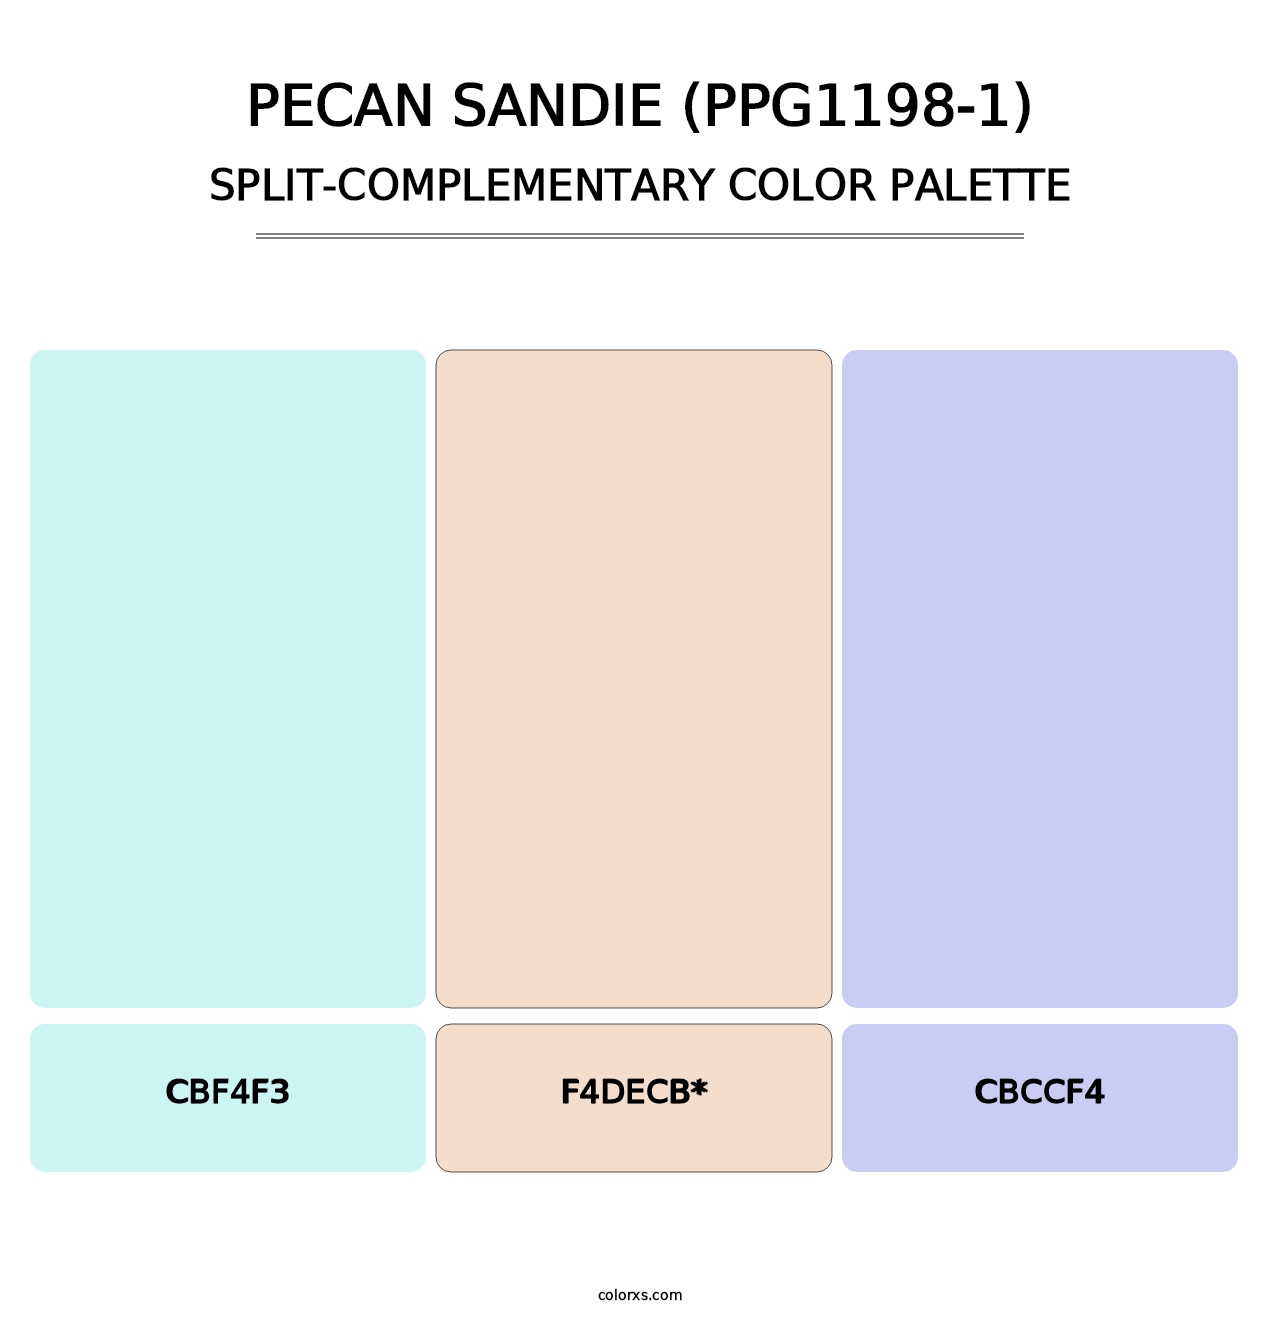 Pecan Sandie (PPG1198-1) - Split-Complementary Color Palette